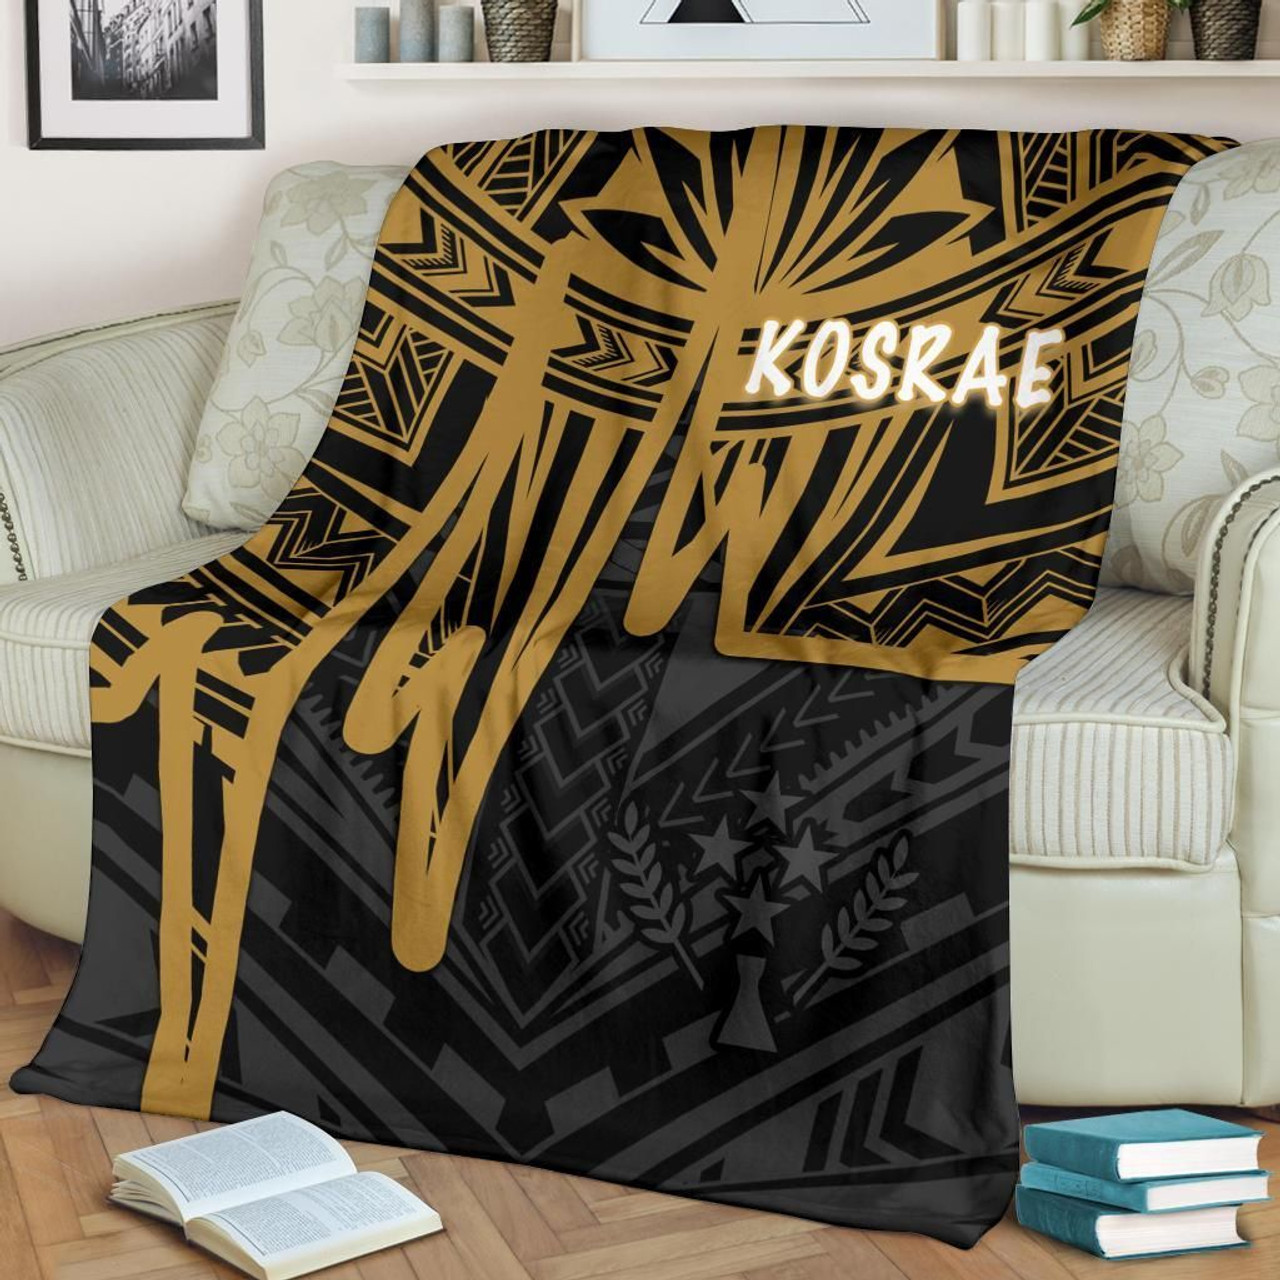 Kosrae Premium Blanket - Kosrae Seal In Heartbeat Patterns Style (Gold) 1